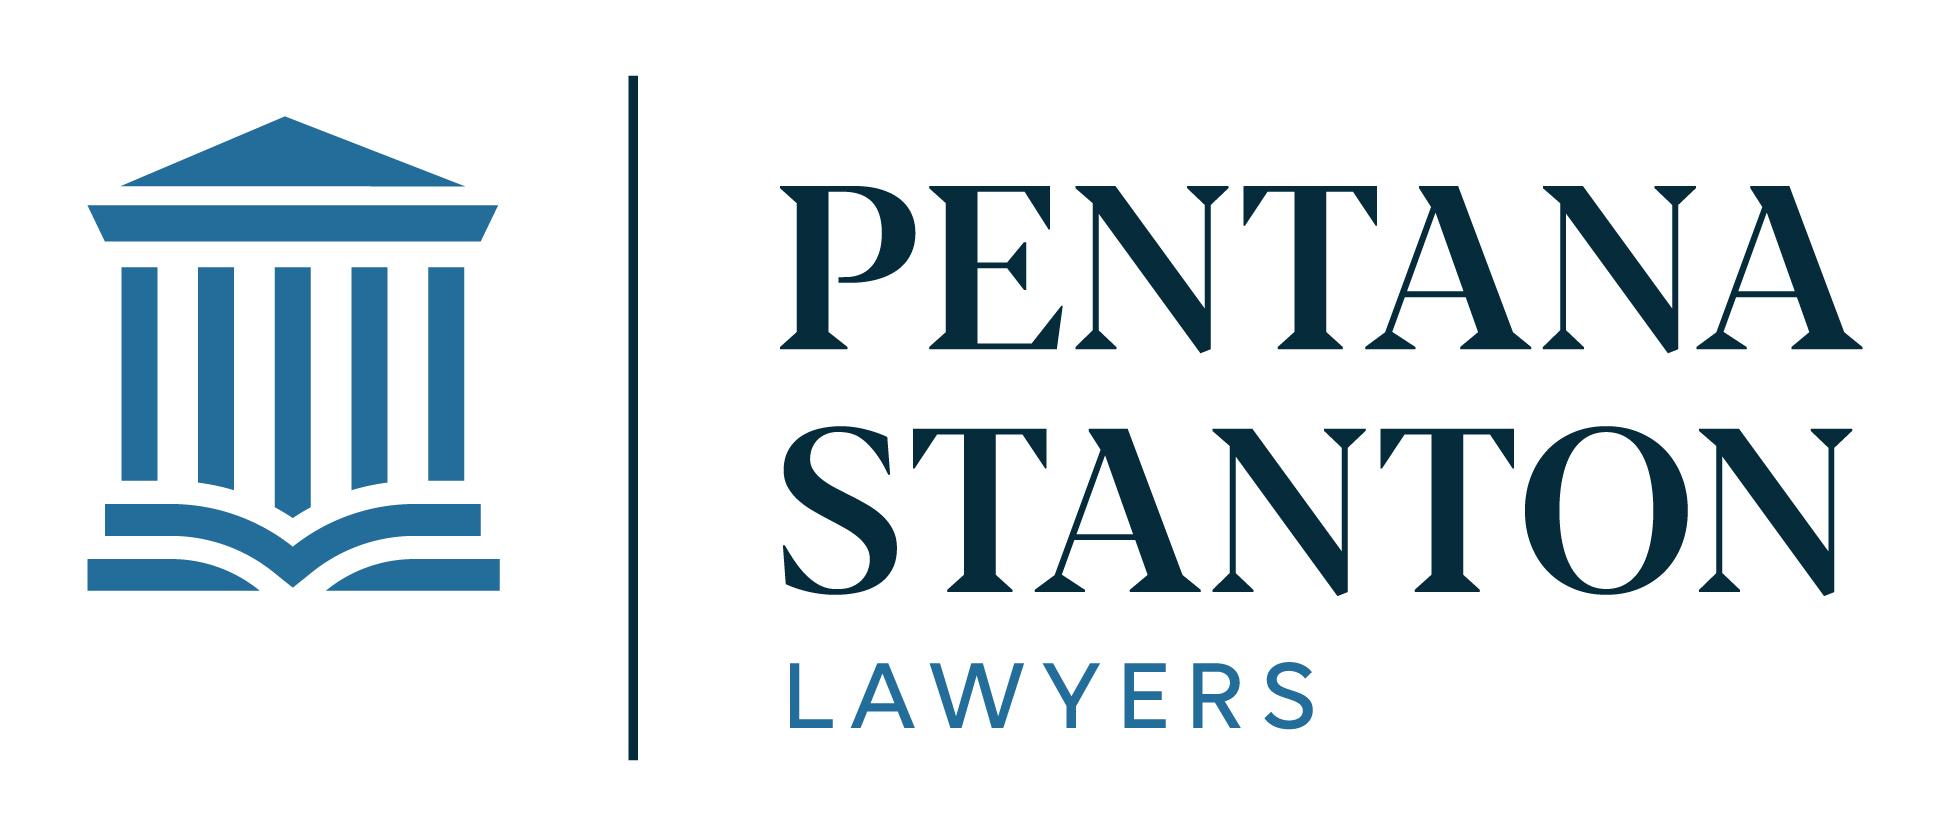 Images Pentana Stanton Lawyers